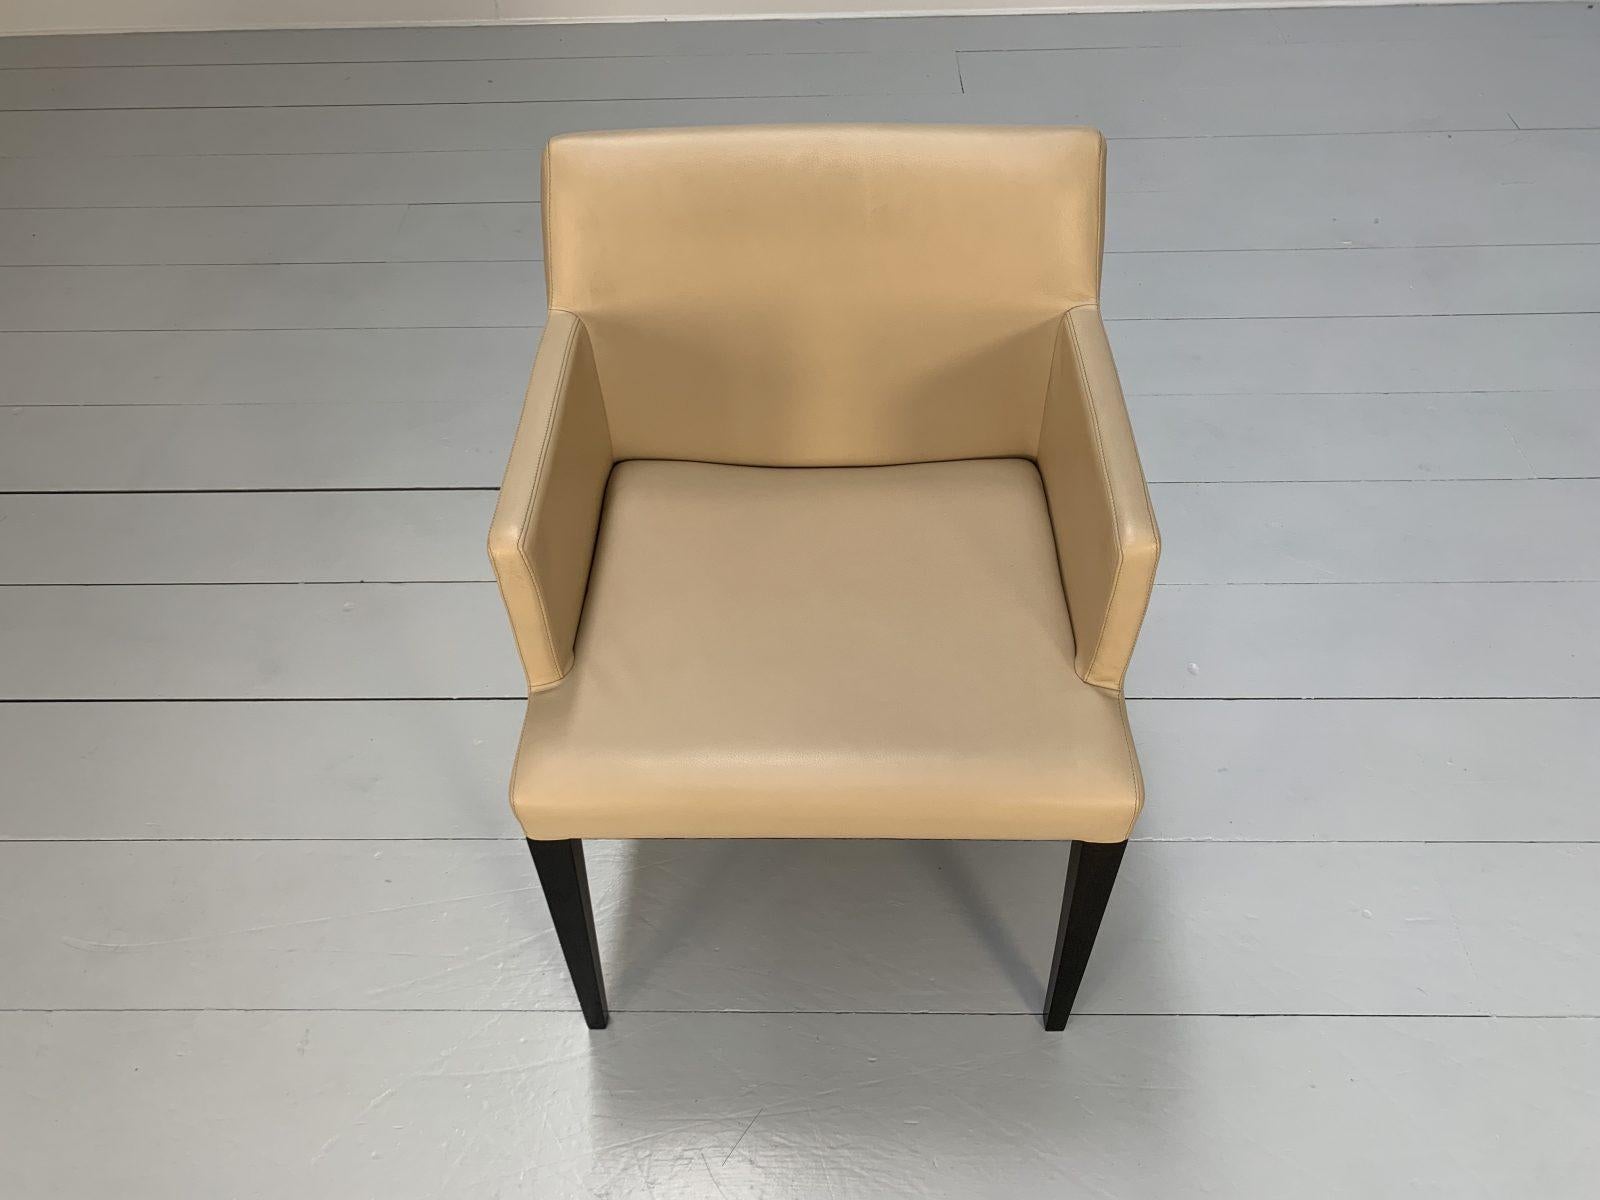 Suite of 6 Poltrona Frau “Liz B” Dining Chairs – In Brown “Pelle Frau” Leather 6